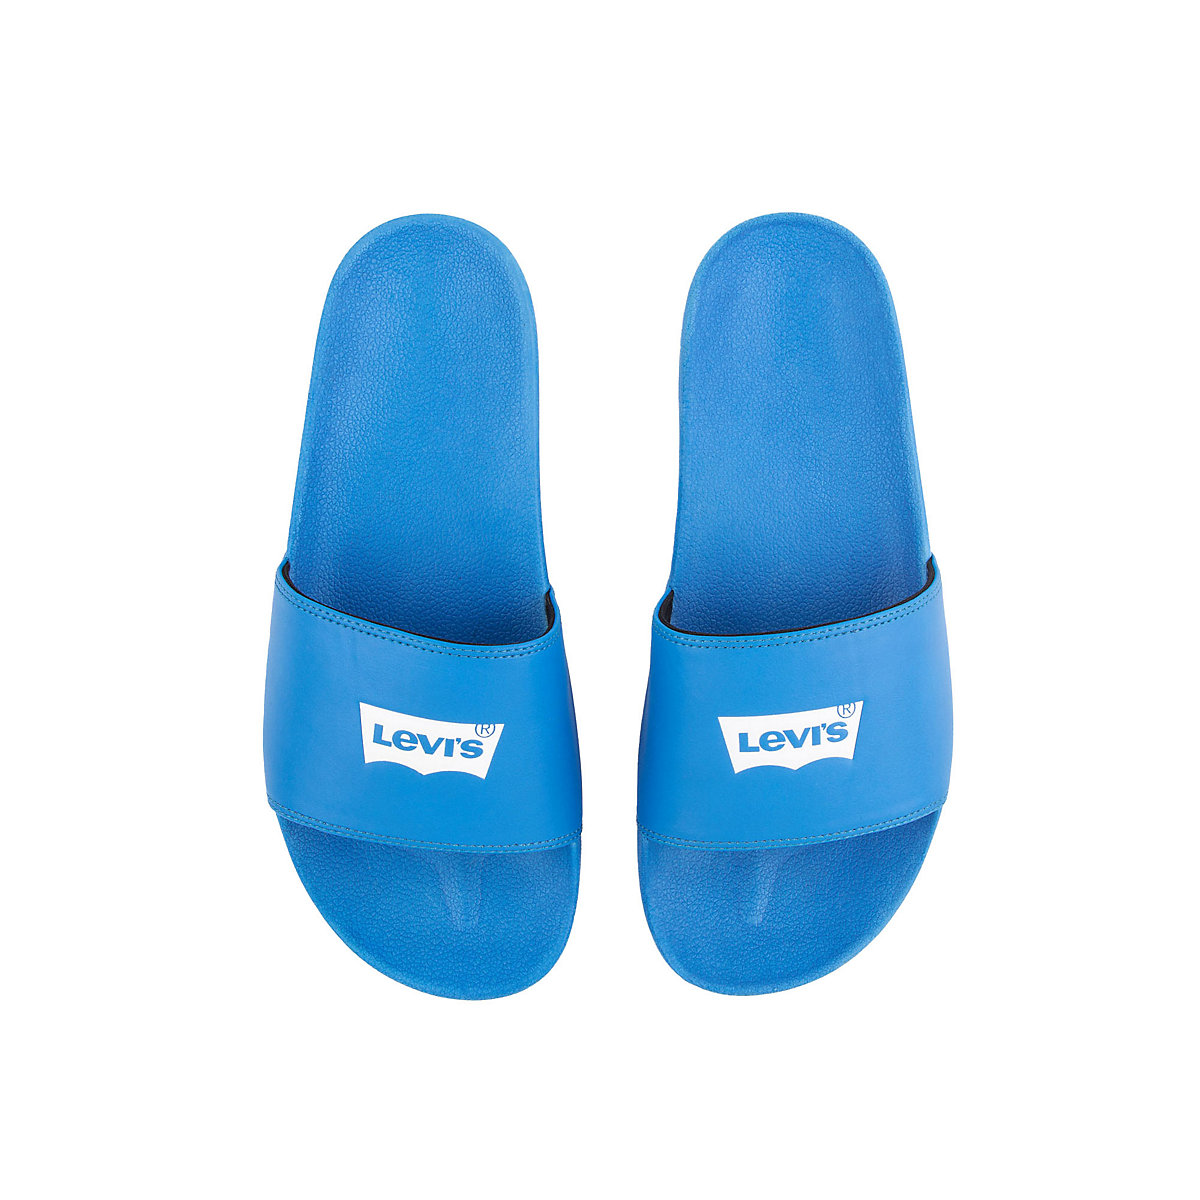 Levi's® LEVIS LEVI'S Herren Badesandalen JUNE BATWING Slipper Badeschuhe Badelatschen Pantoletten blau